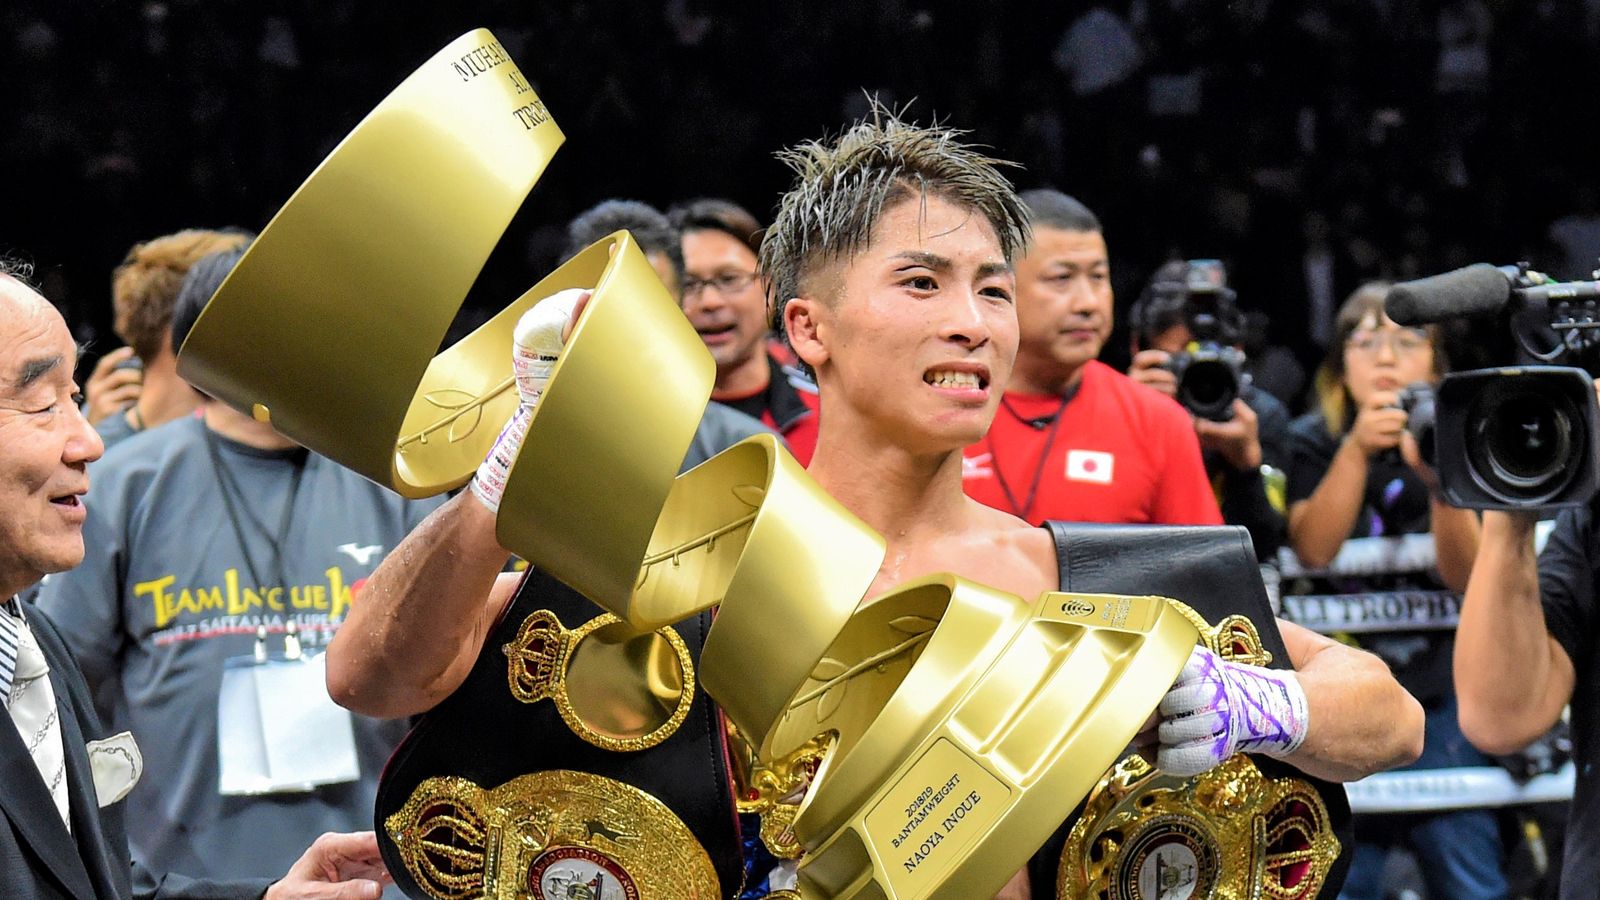 WBSS: Naoya Inoue defeats Nonito Donaire on points to win World Boxing